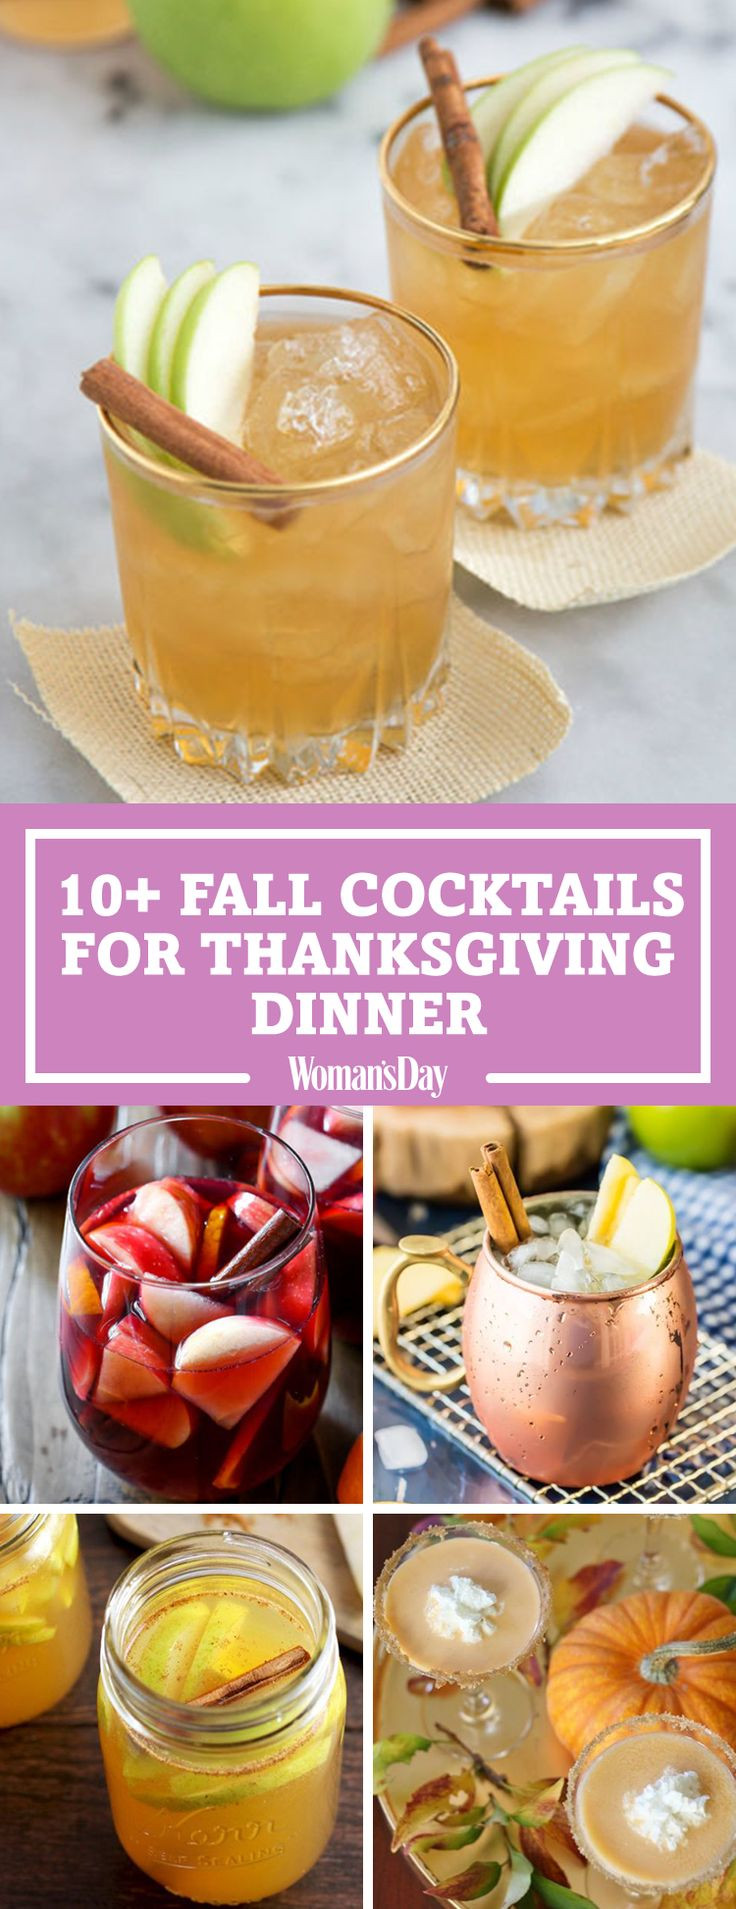 Thanksgiving Day Drinks
 Best 25 Thanksgiving drinks ideas on Pinterest